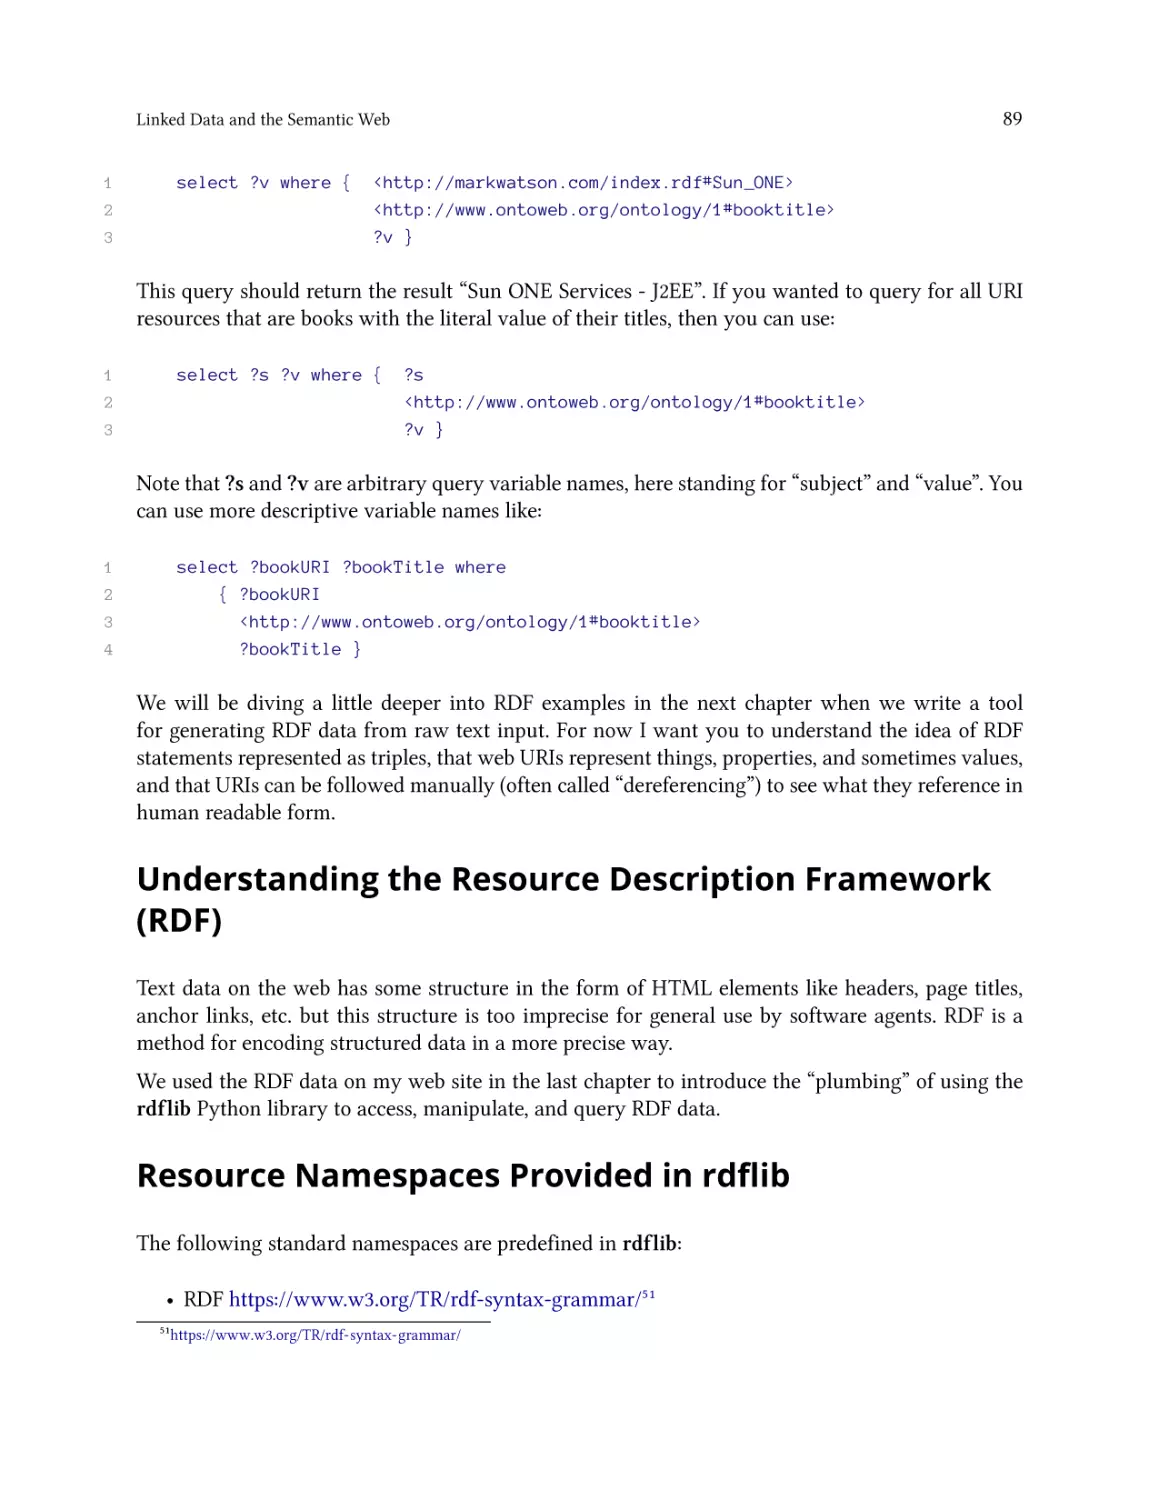 Understanding the Resource Description Framework (RDF)
Resource Namespaces Provided in rdflib